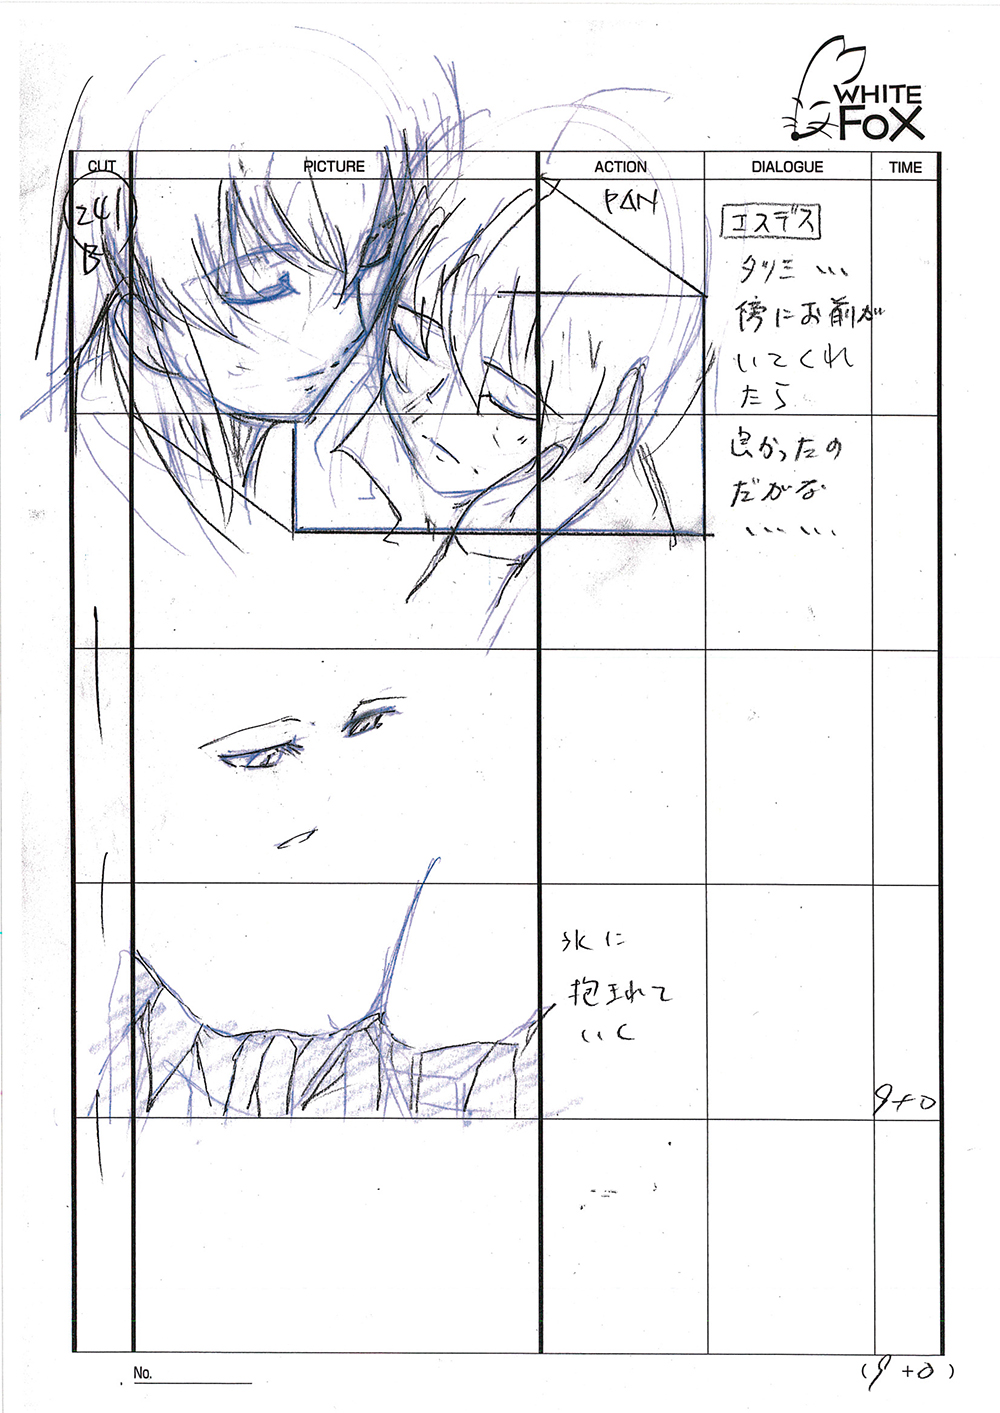 Akame ga Kill Episode 24 Storyboard Leak 137